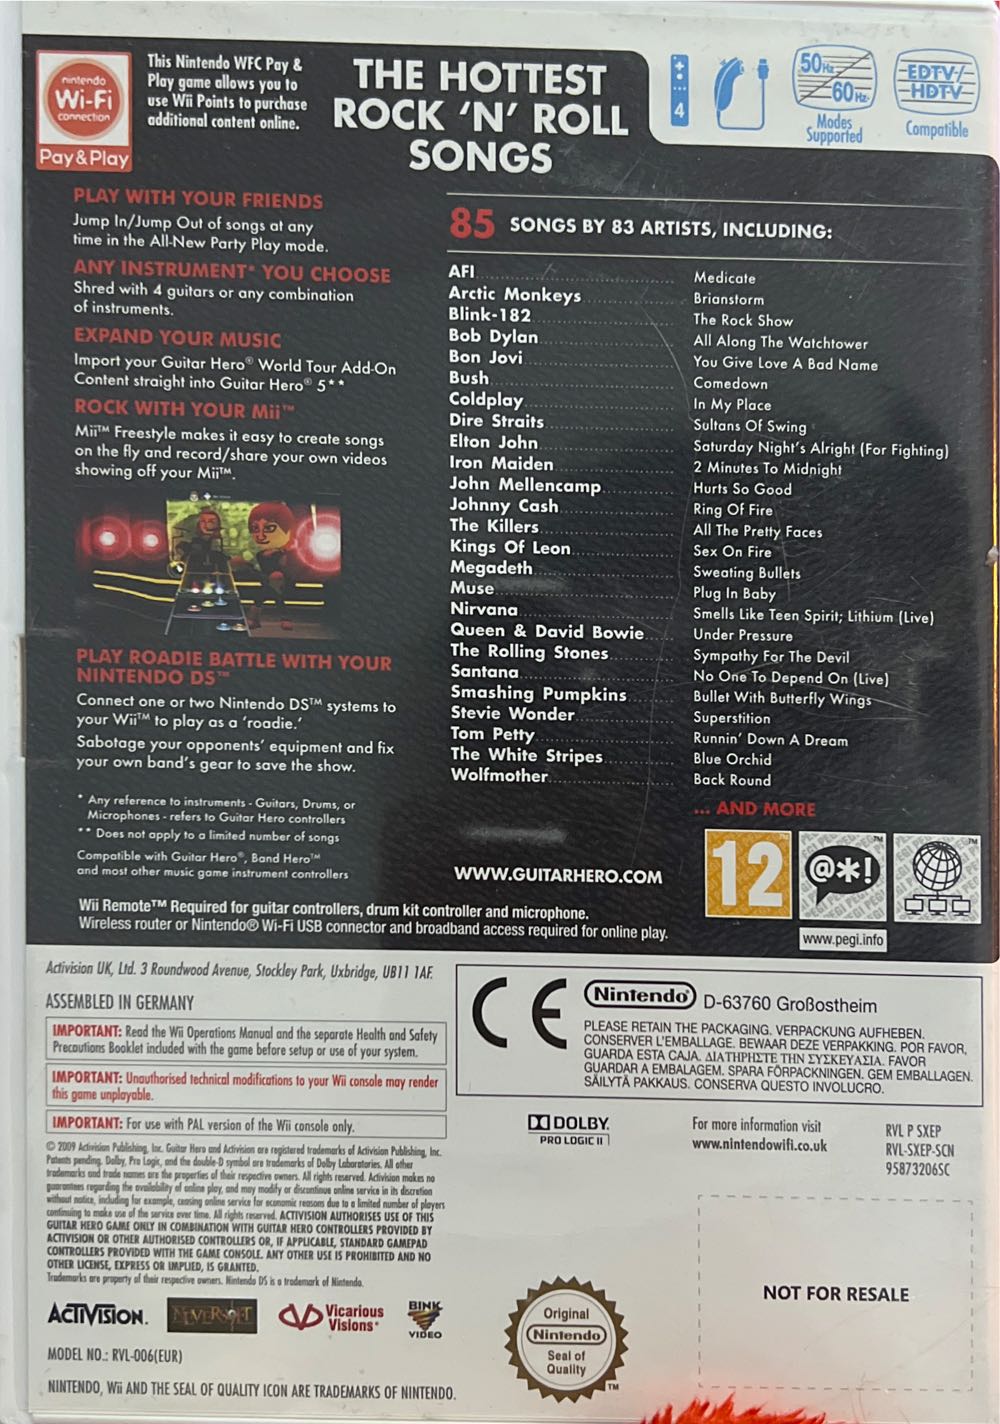 Guitar Hero 5 - Nintendo Wii video game collectible - Main Image 2